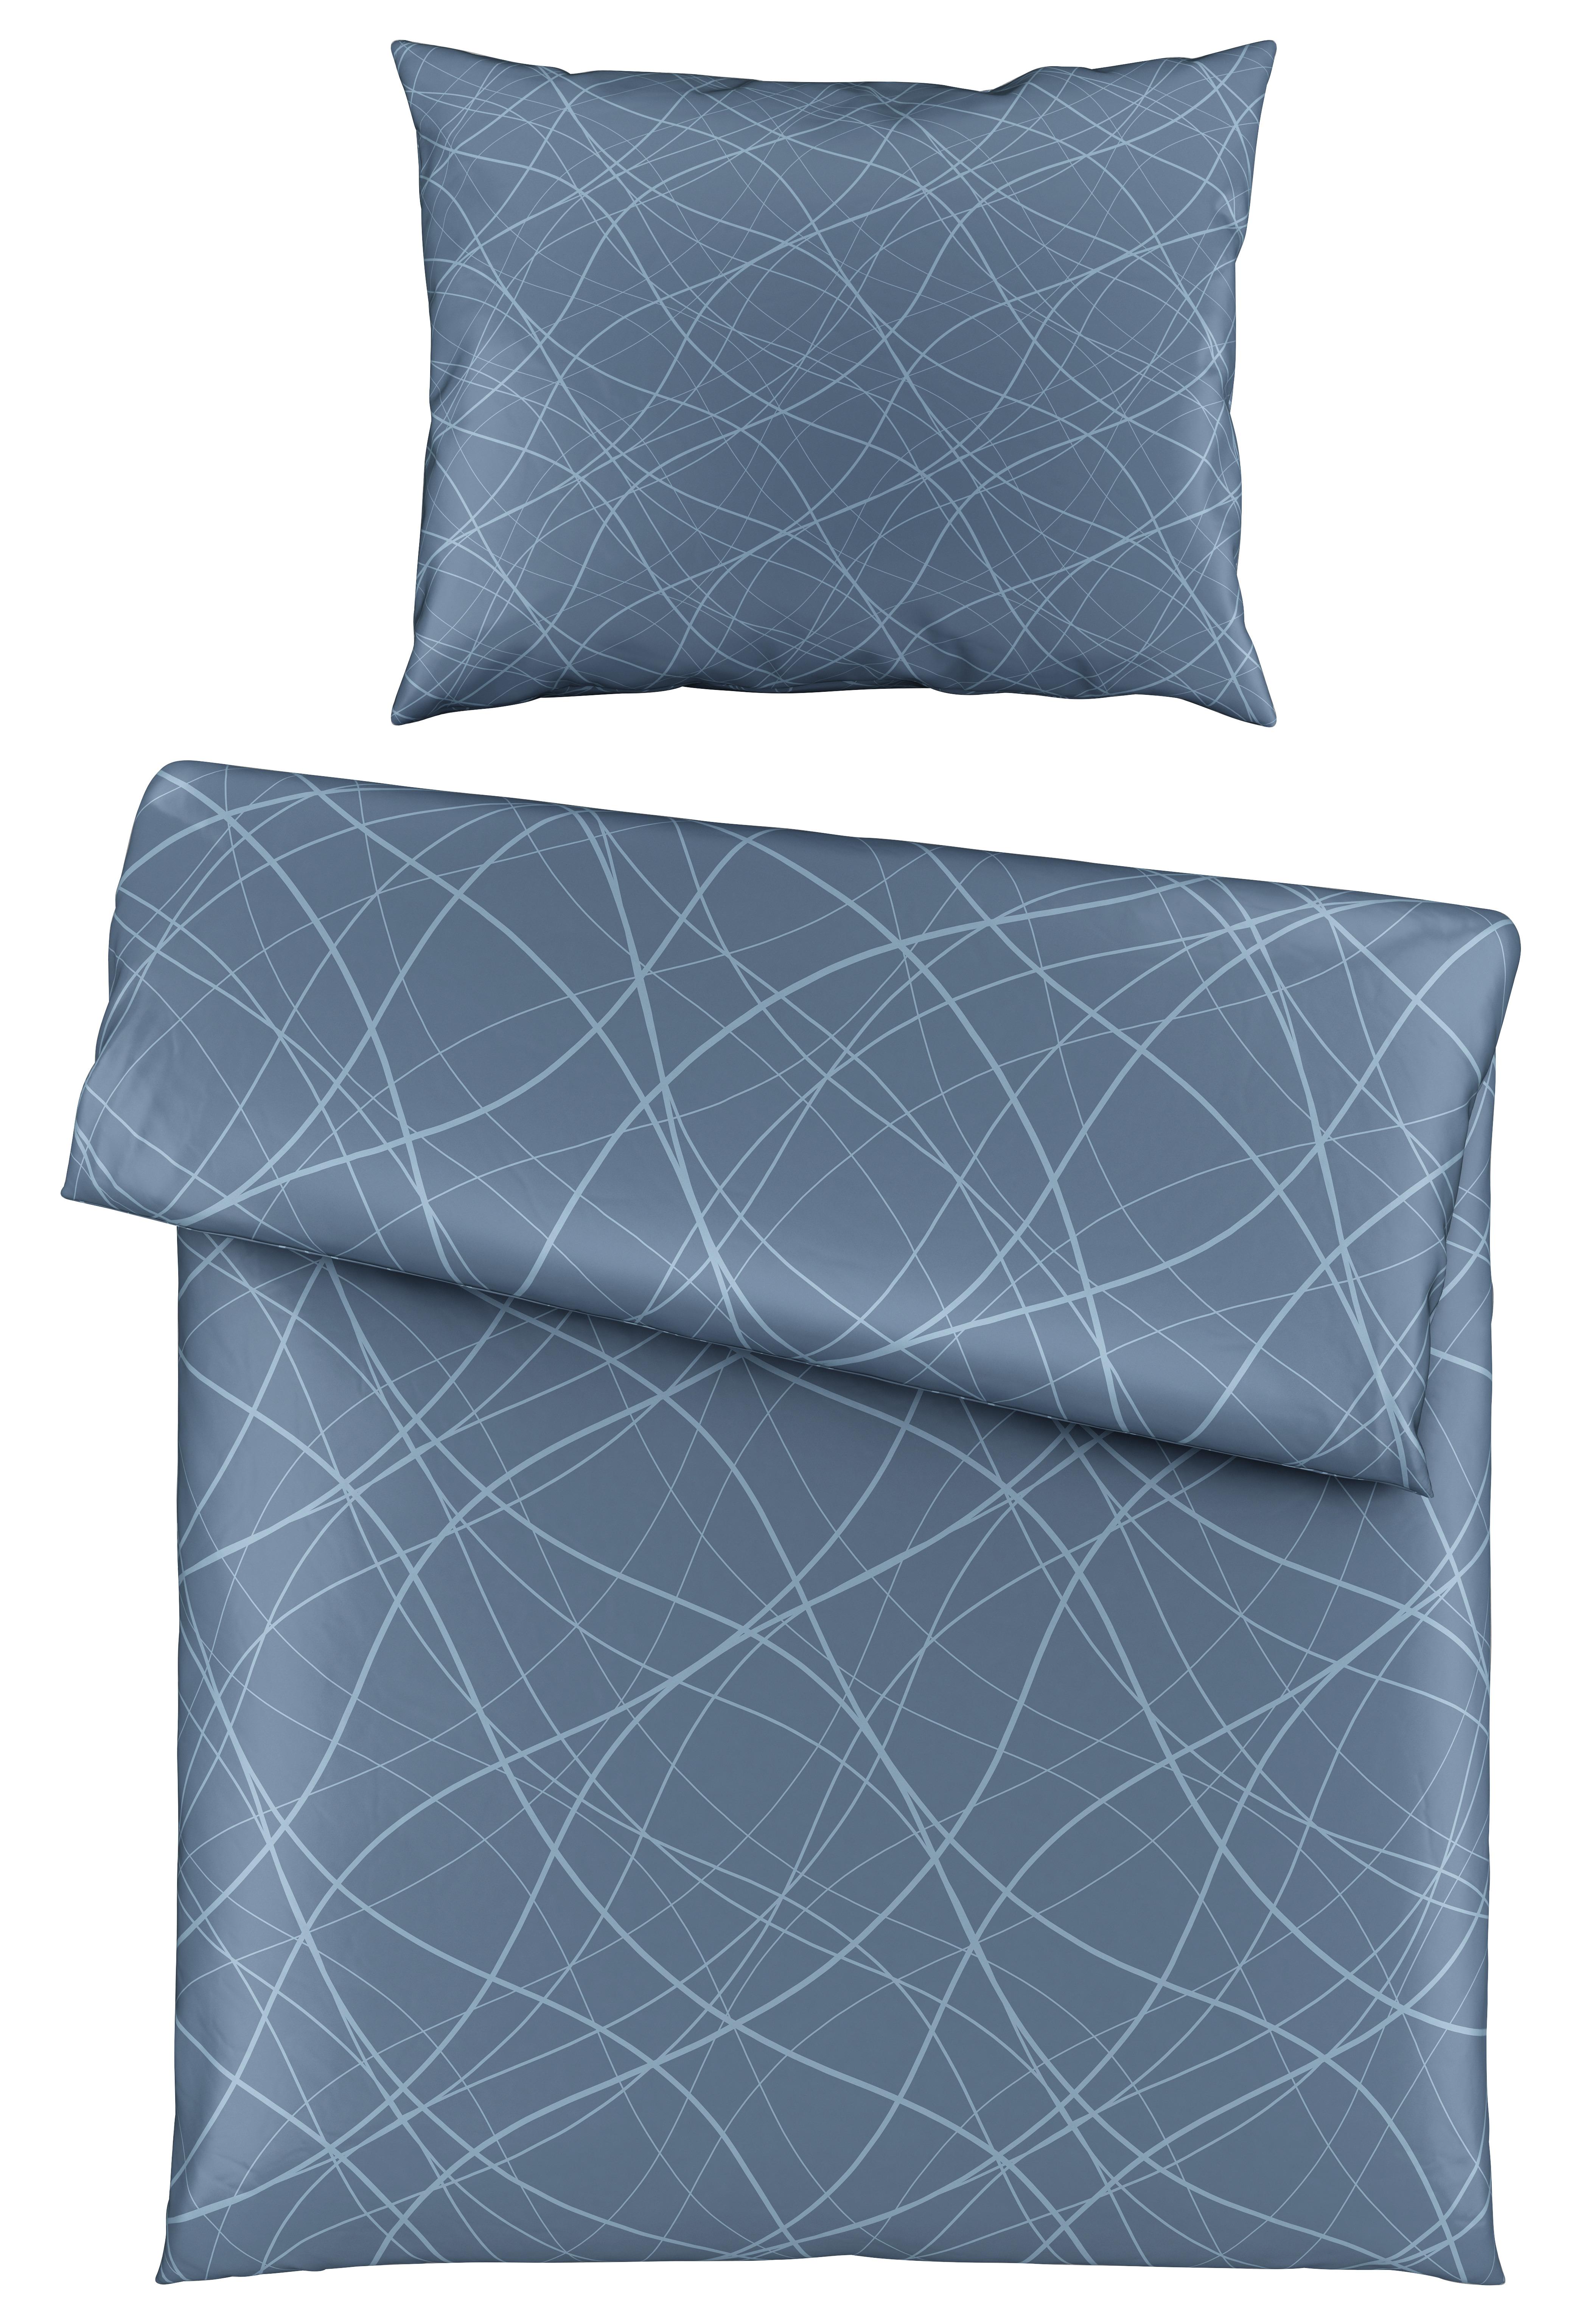 Bettwäsche Alex Design ca. 140x200cm - Blau, MODERN, Textil (140/200cm) - Premium Living